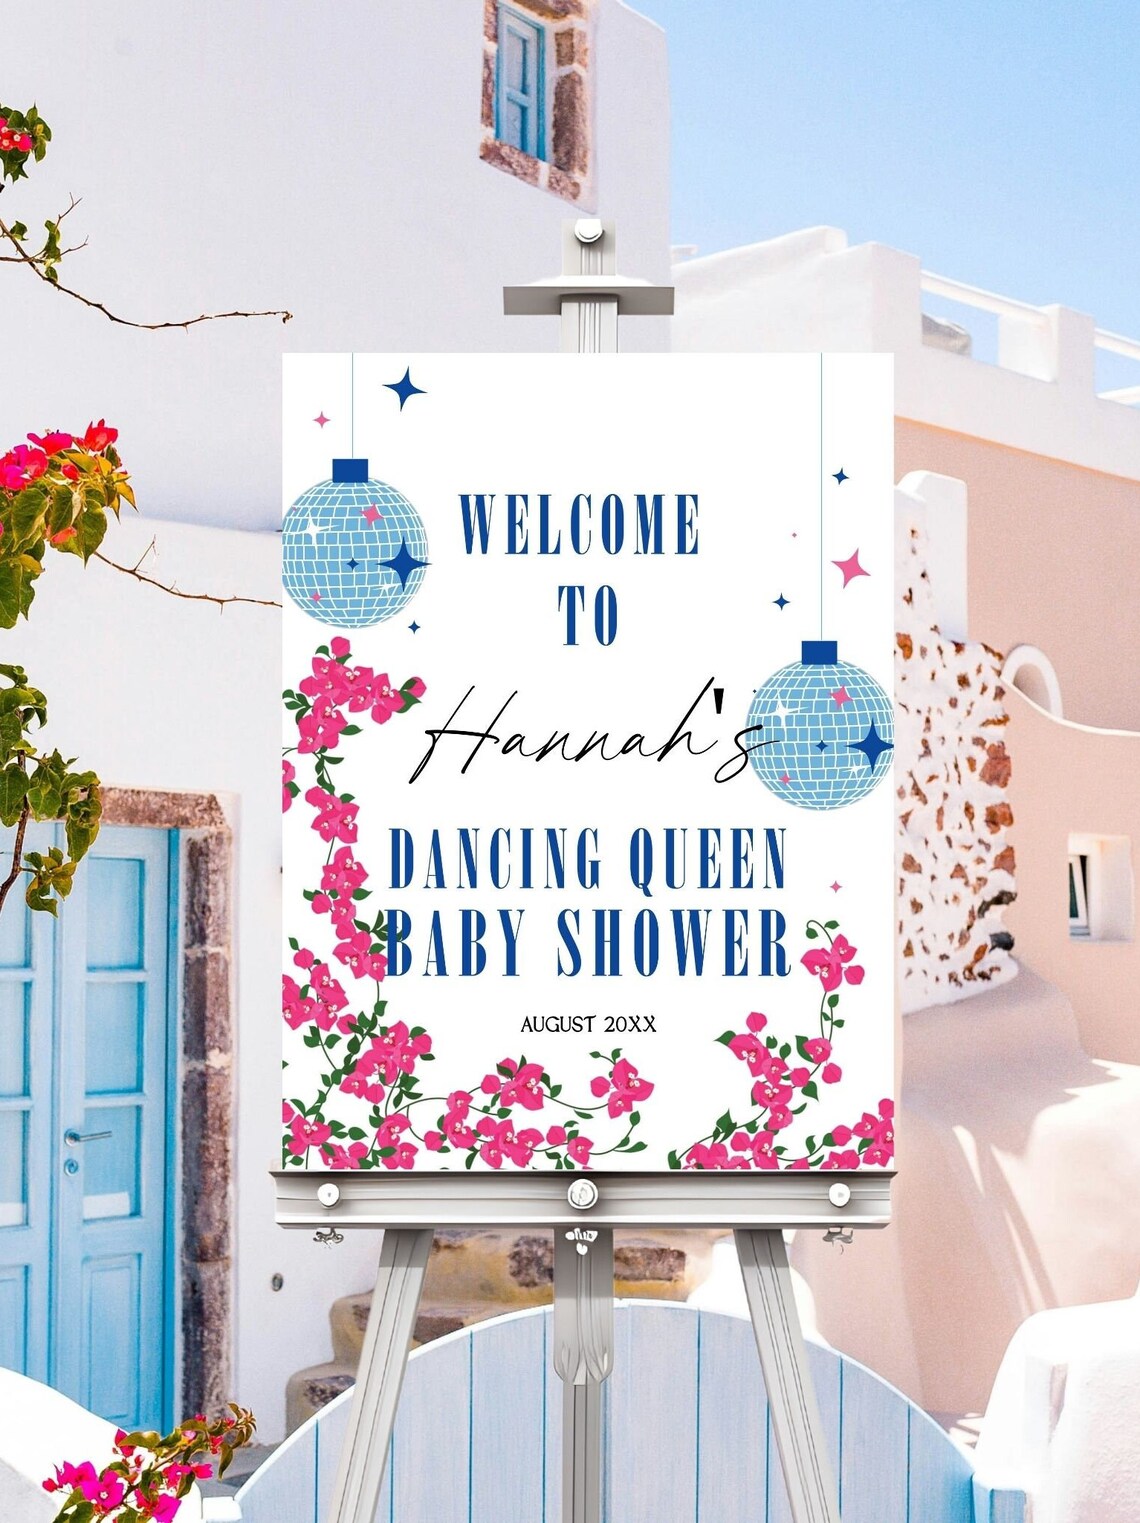 Dancing Queen Baby Shower Welcome Sign & Mediterranean Blue Tile template